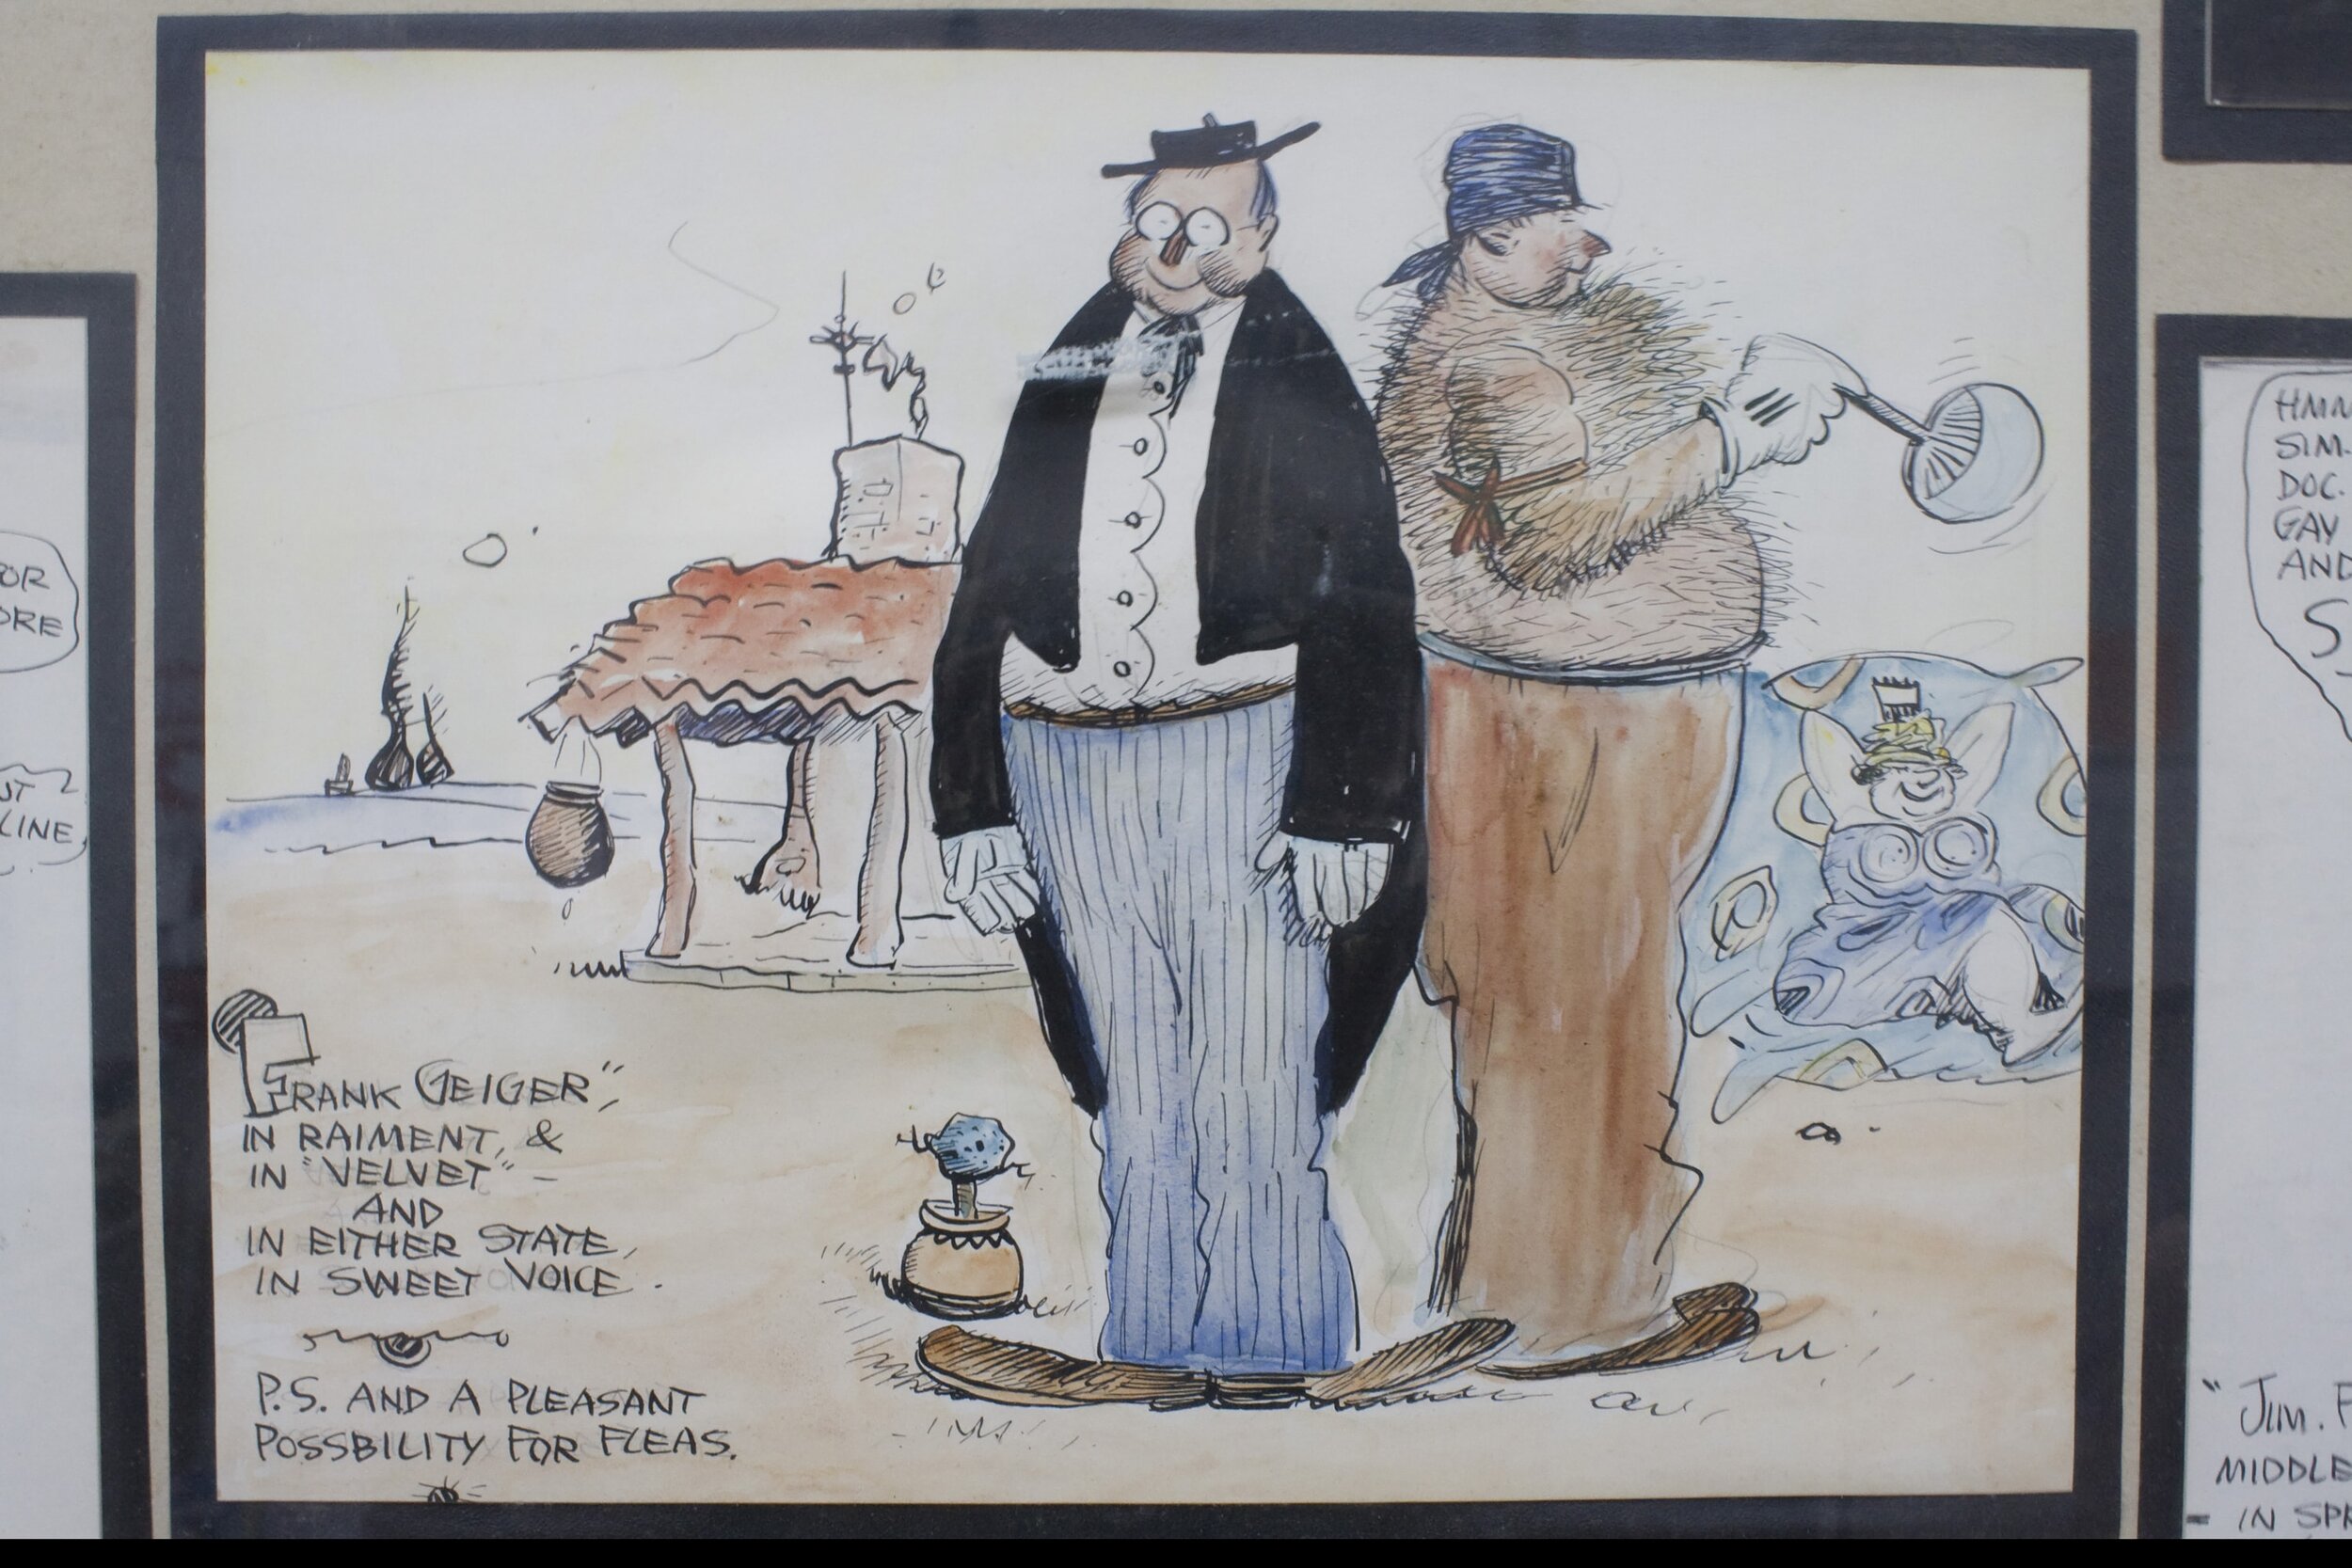 21-1932-frank-geiger-caricature-in-uplifters.jpg